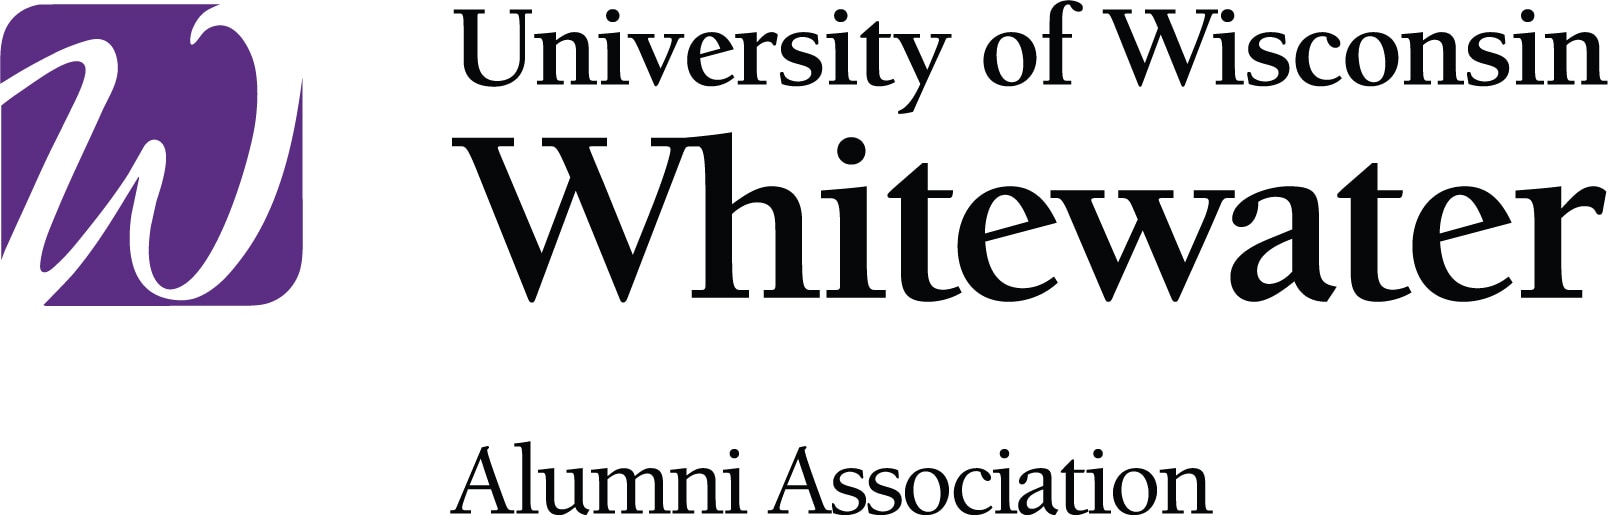 UW Whitewater Alumni Association logo